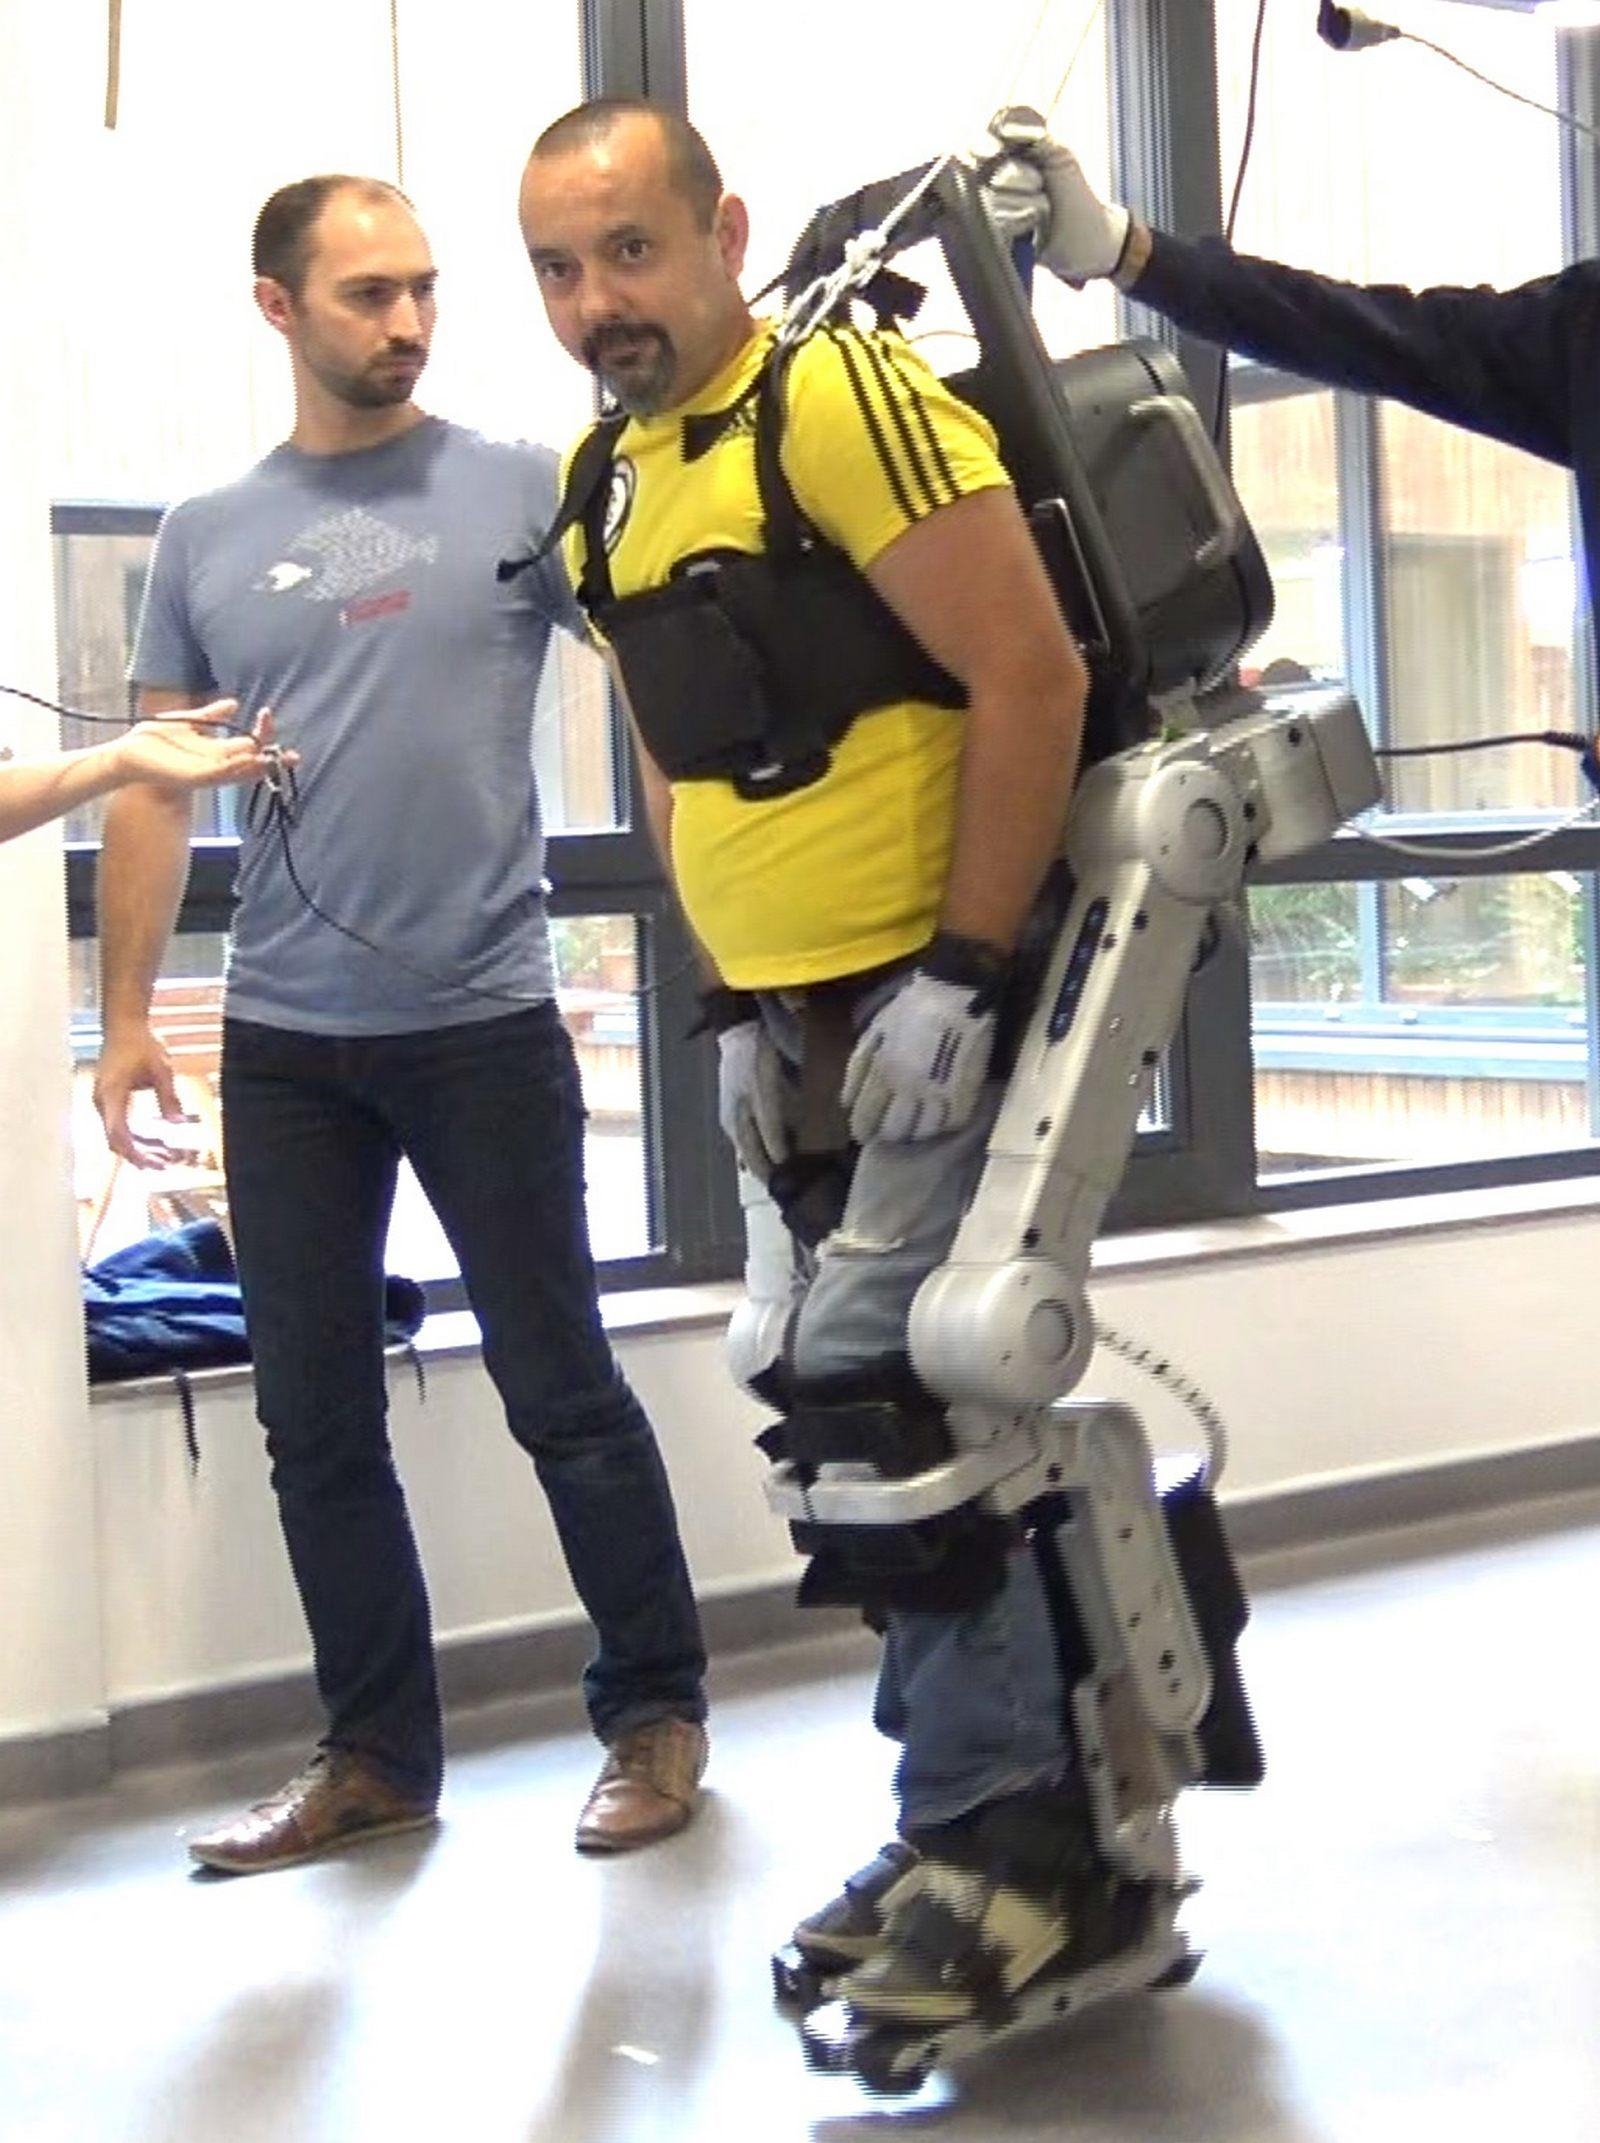 Wandercraft's latest exoskeleton lets paraplegics walk with a more natural gait | DeviceDaily.com